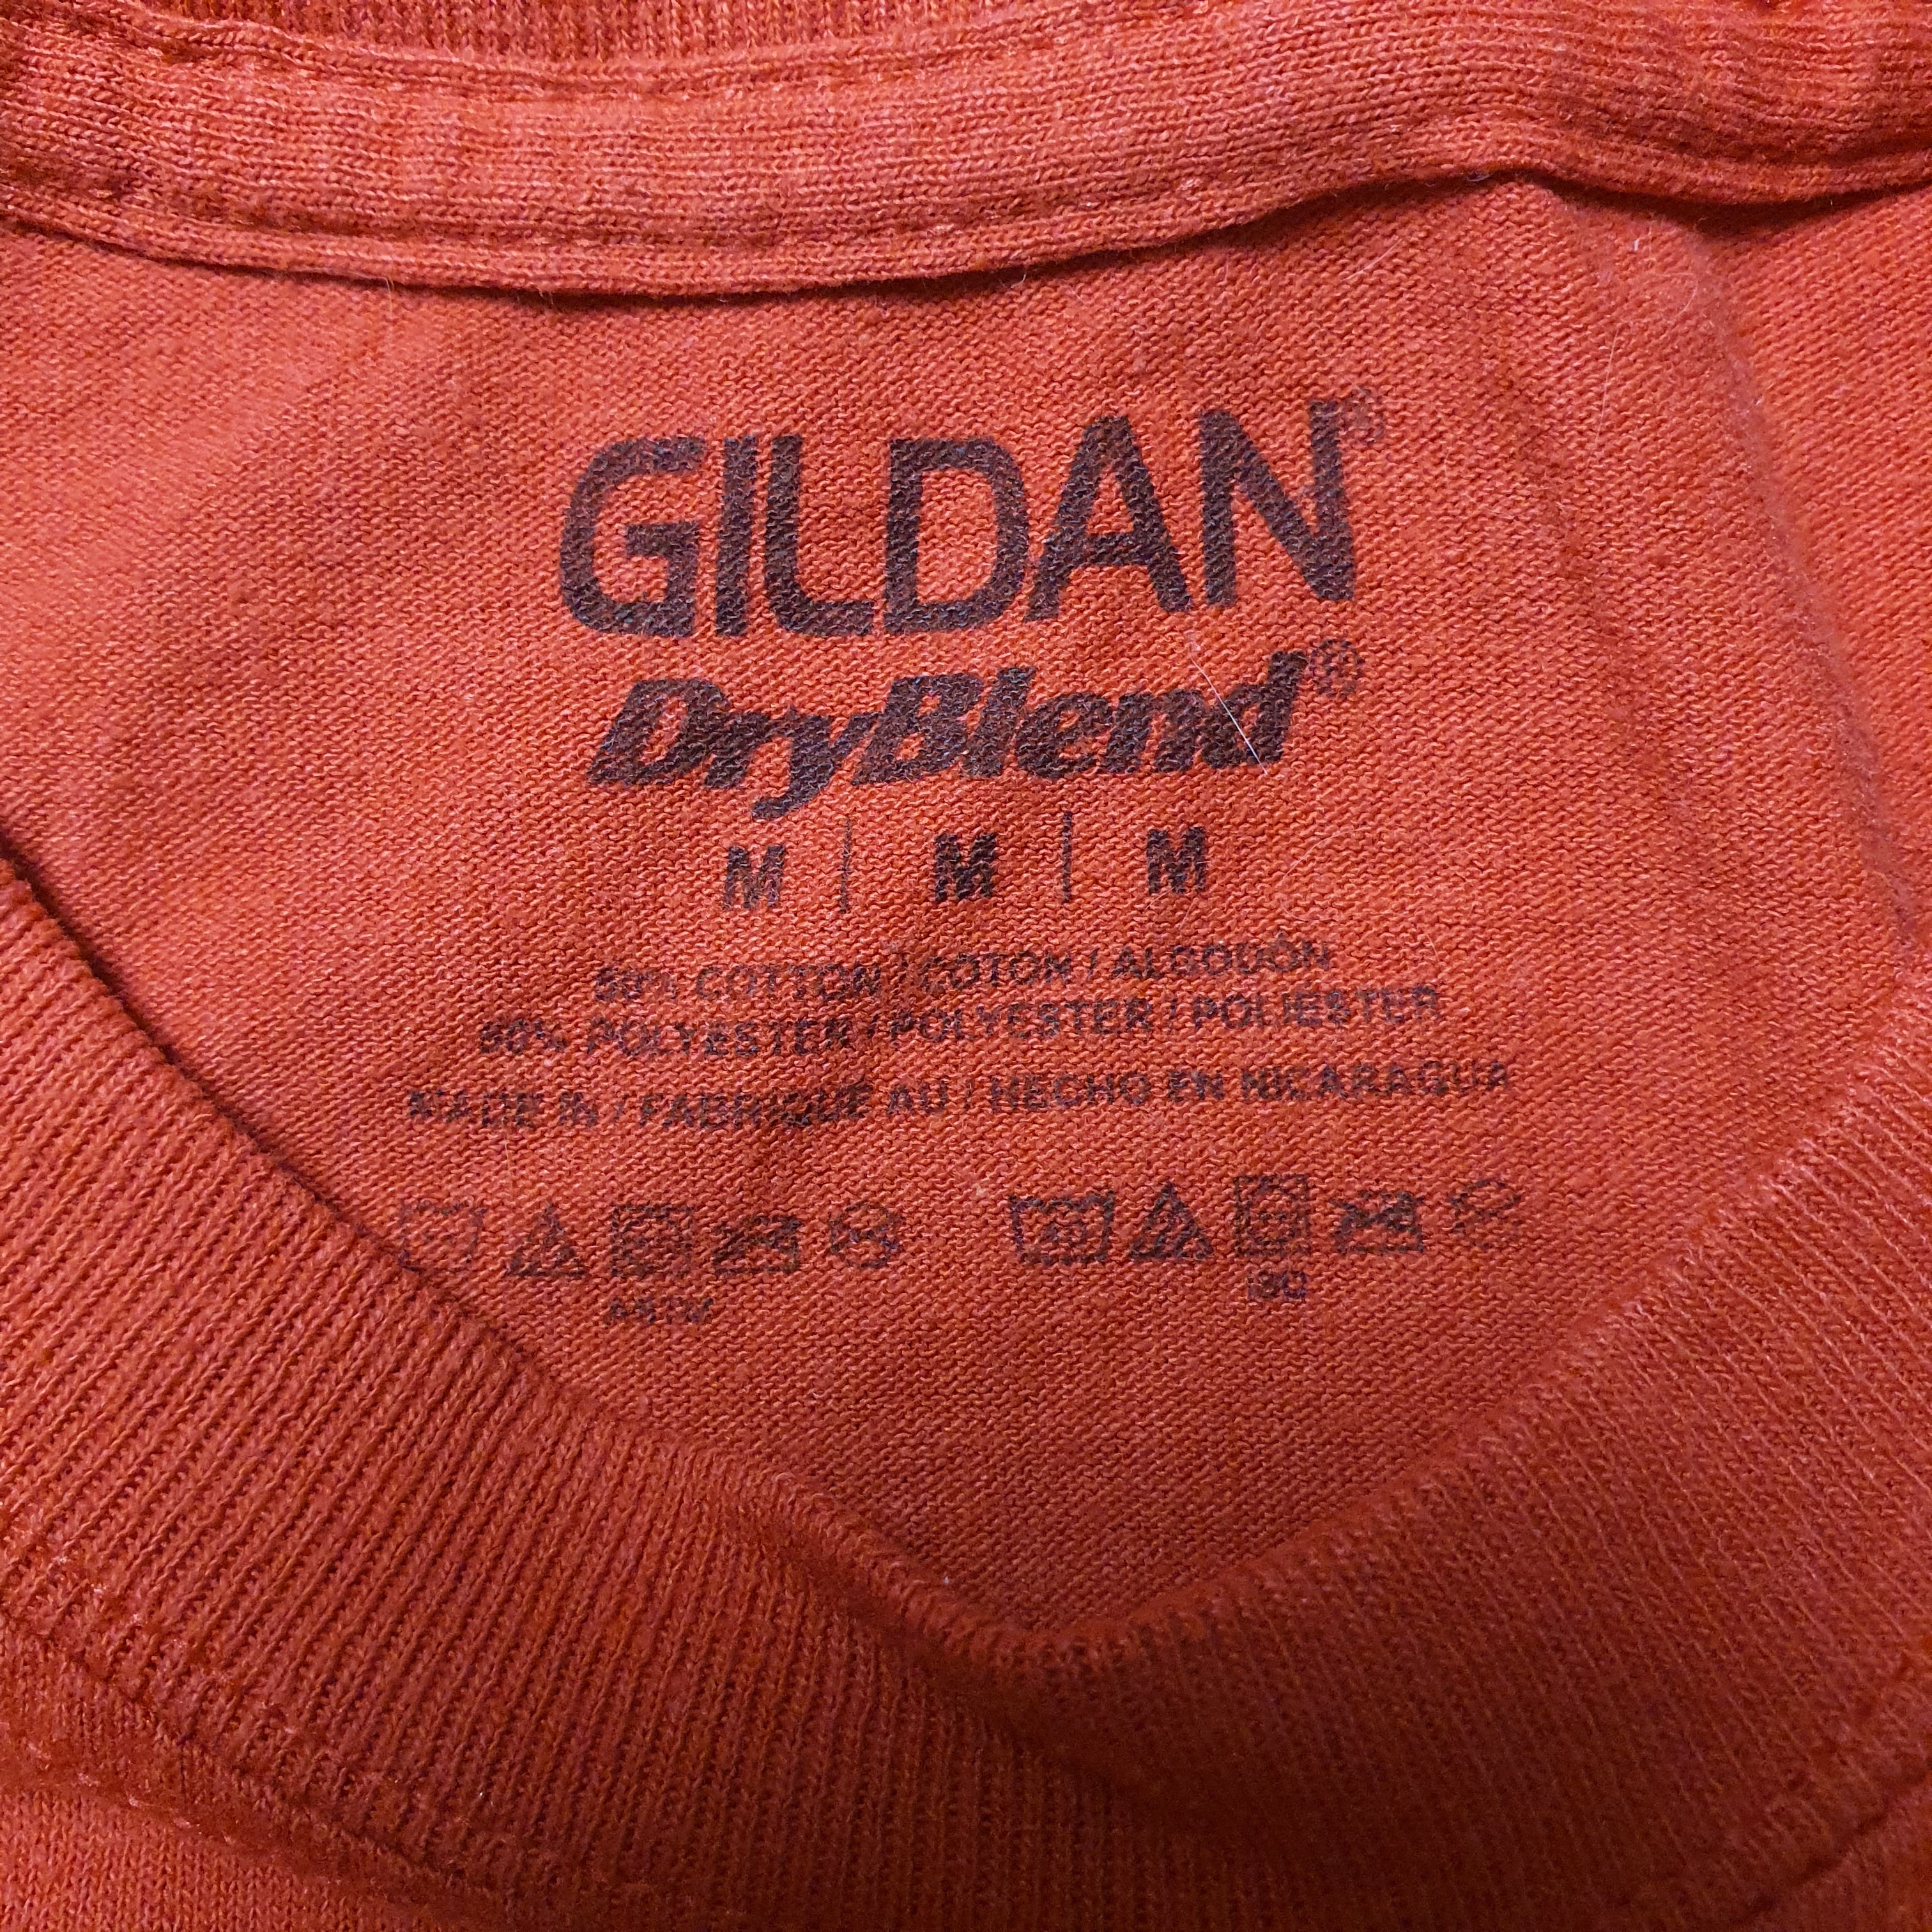 [M] Gildan Minnehaha Strong T-Shirt